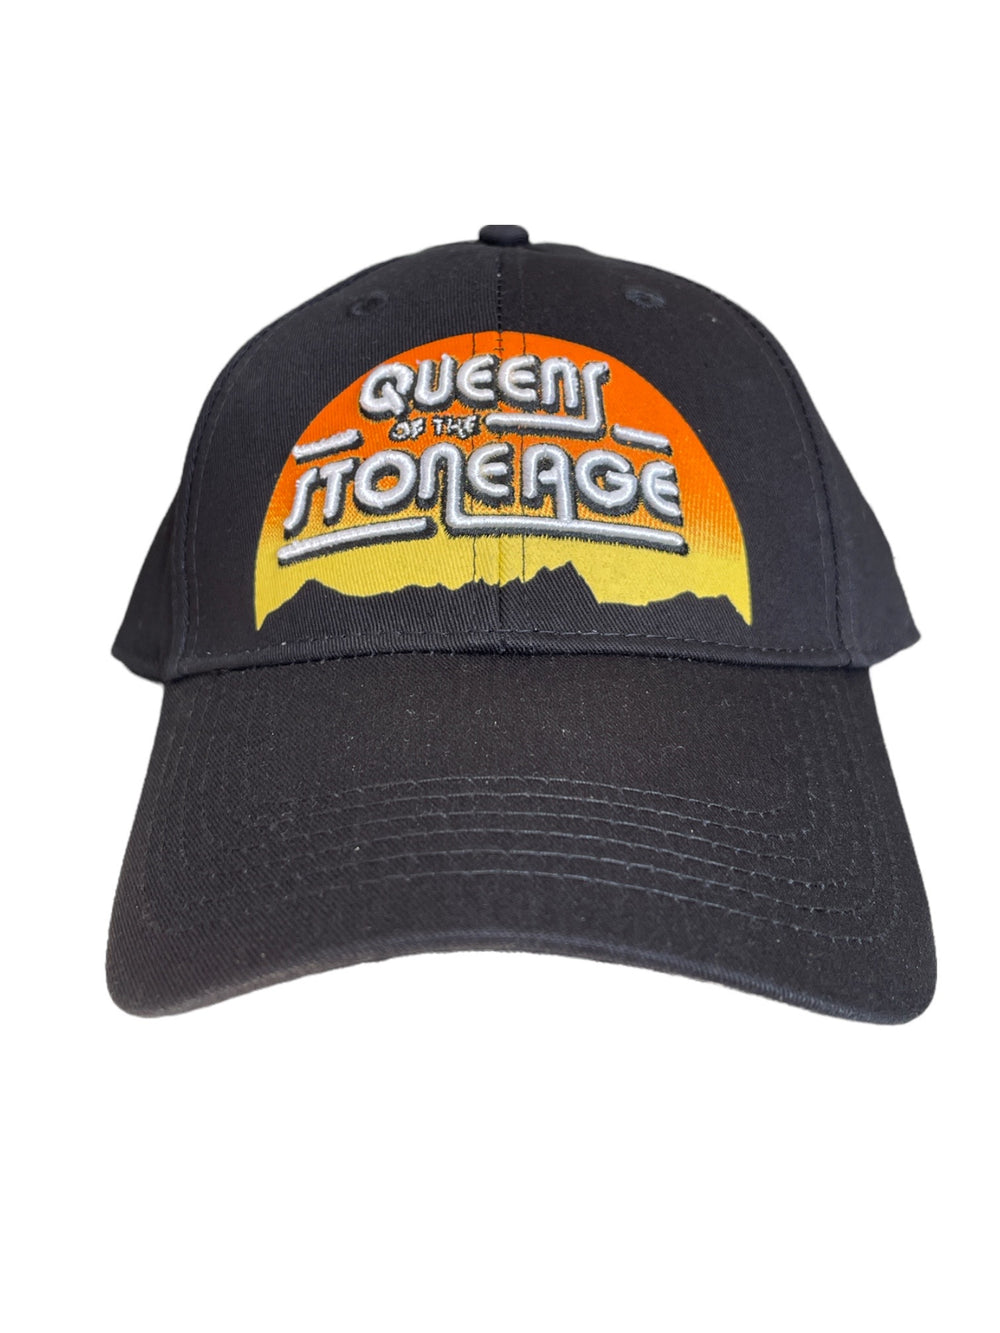 Queens of The Stone Age Sunrise Logo Official Peak Cap Adjustable Brand New